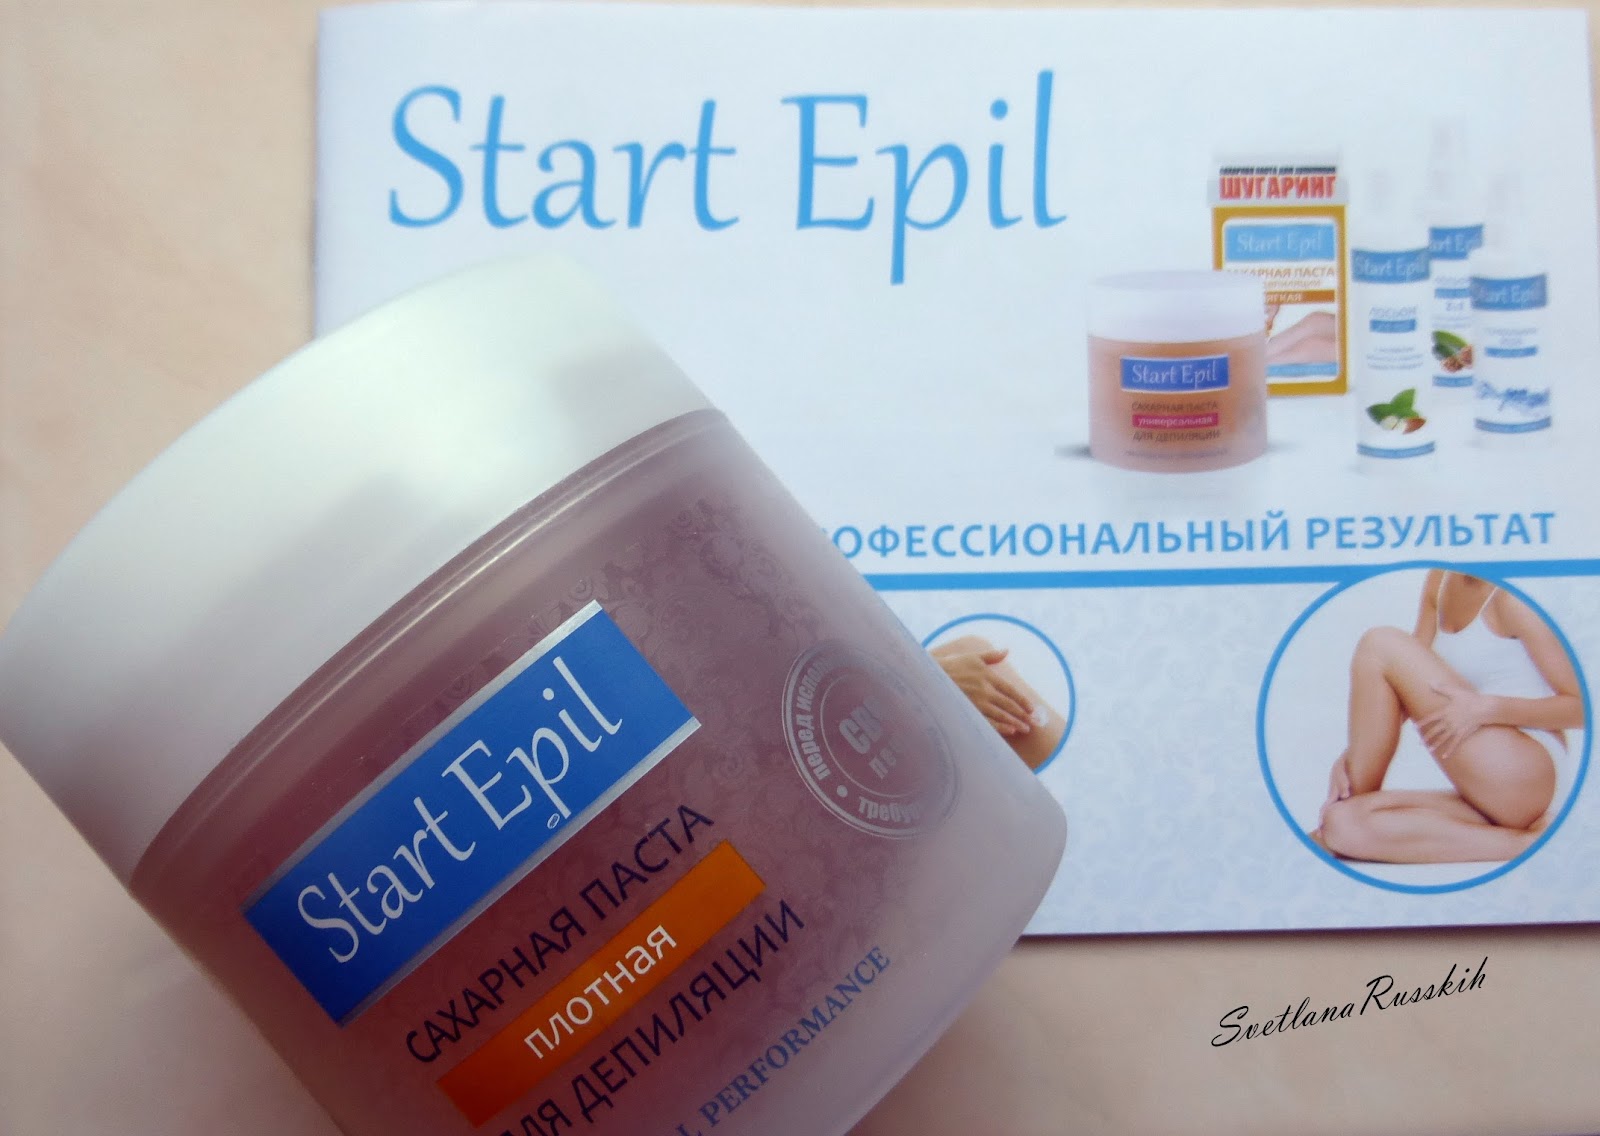 Est epil. Паста для шугаринга start epil. Депиляция старт Эпил. Start epil сахарная паста для депиляции "пластичная" 400 гр. Start epil магнит.